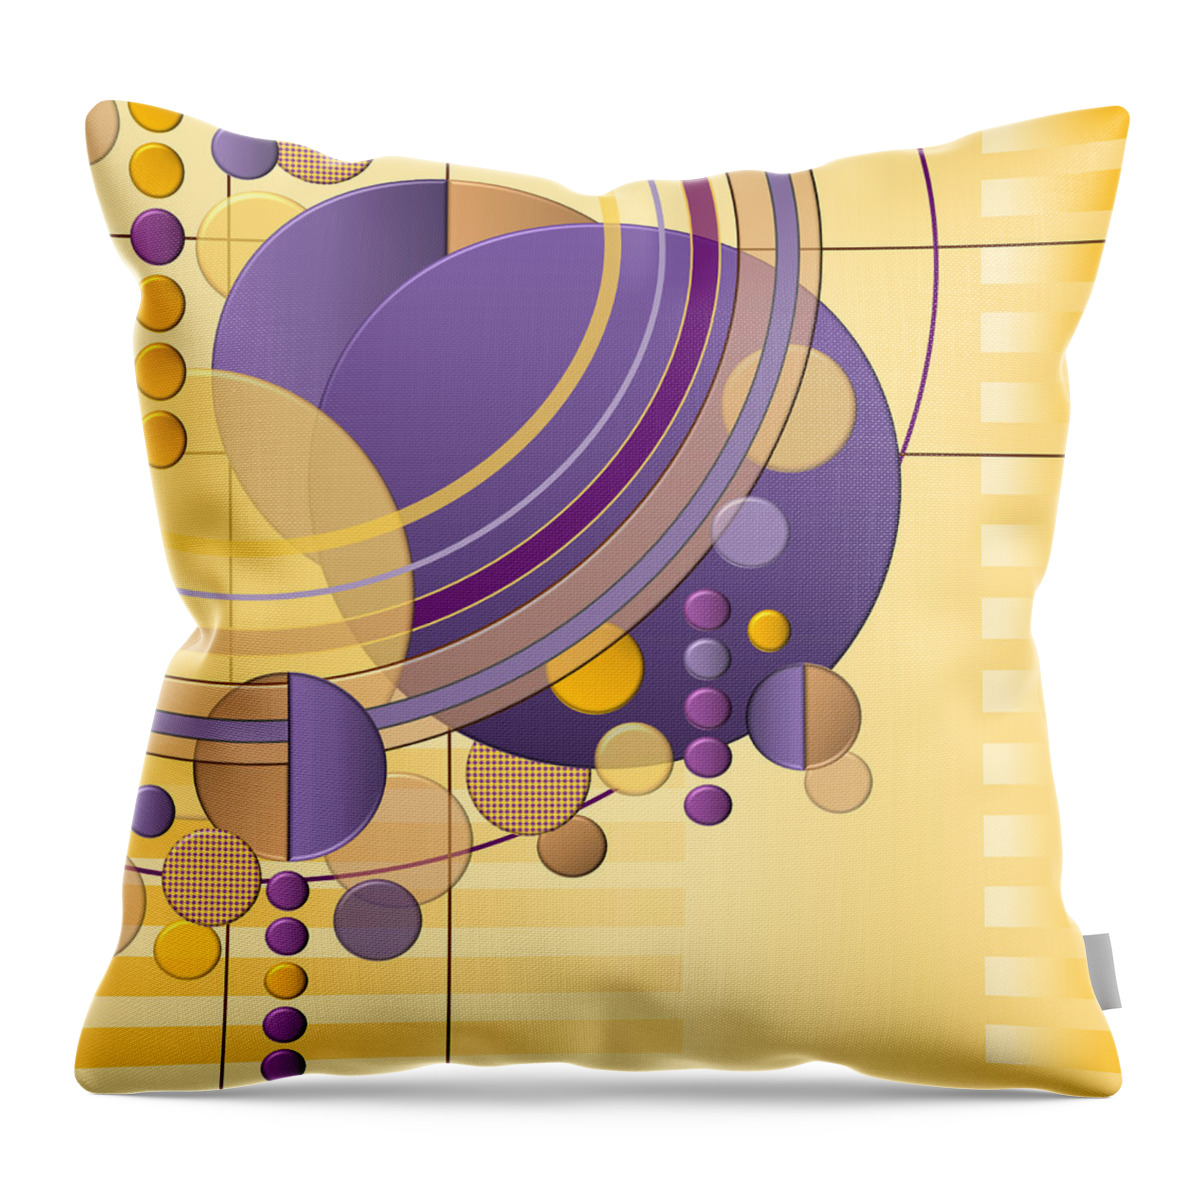 Art Deco Throw Pillow featuring the digital art Orbital by Tara Hutton